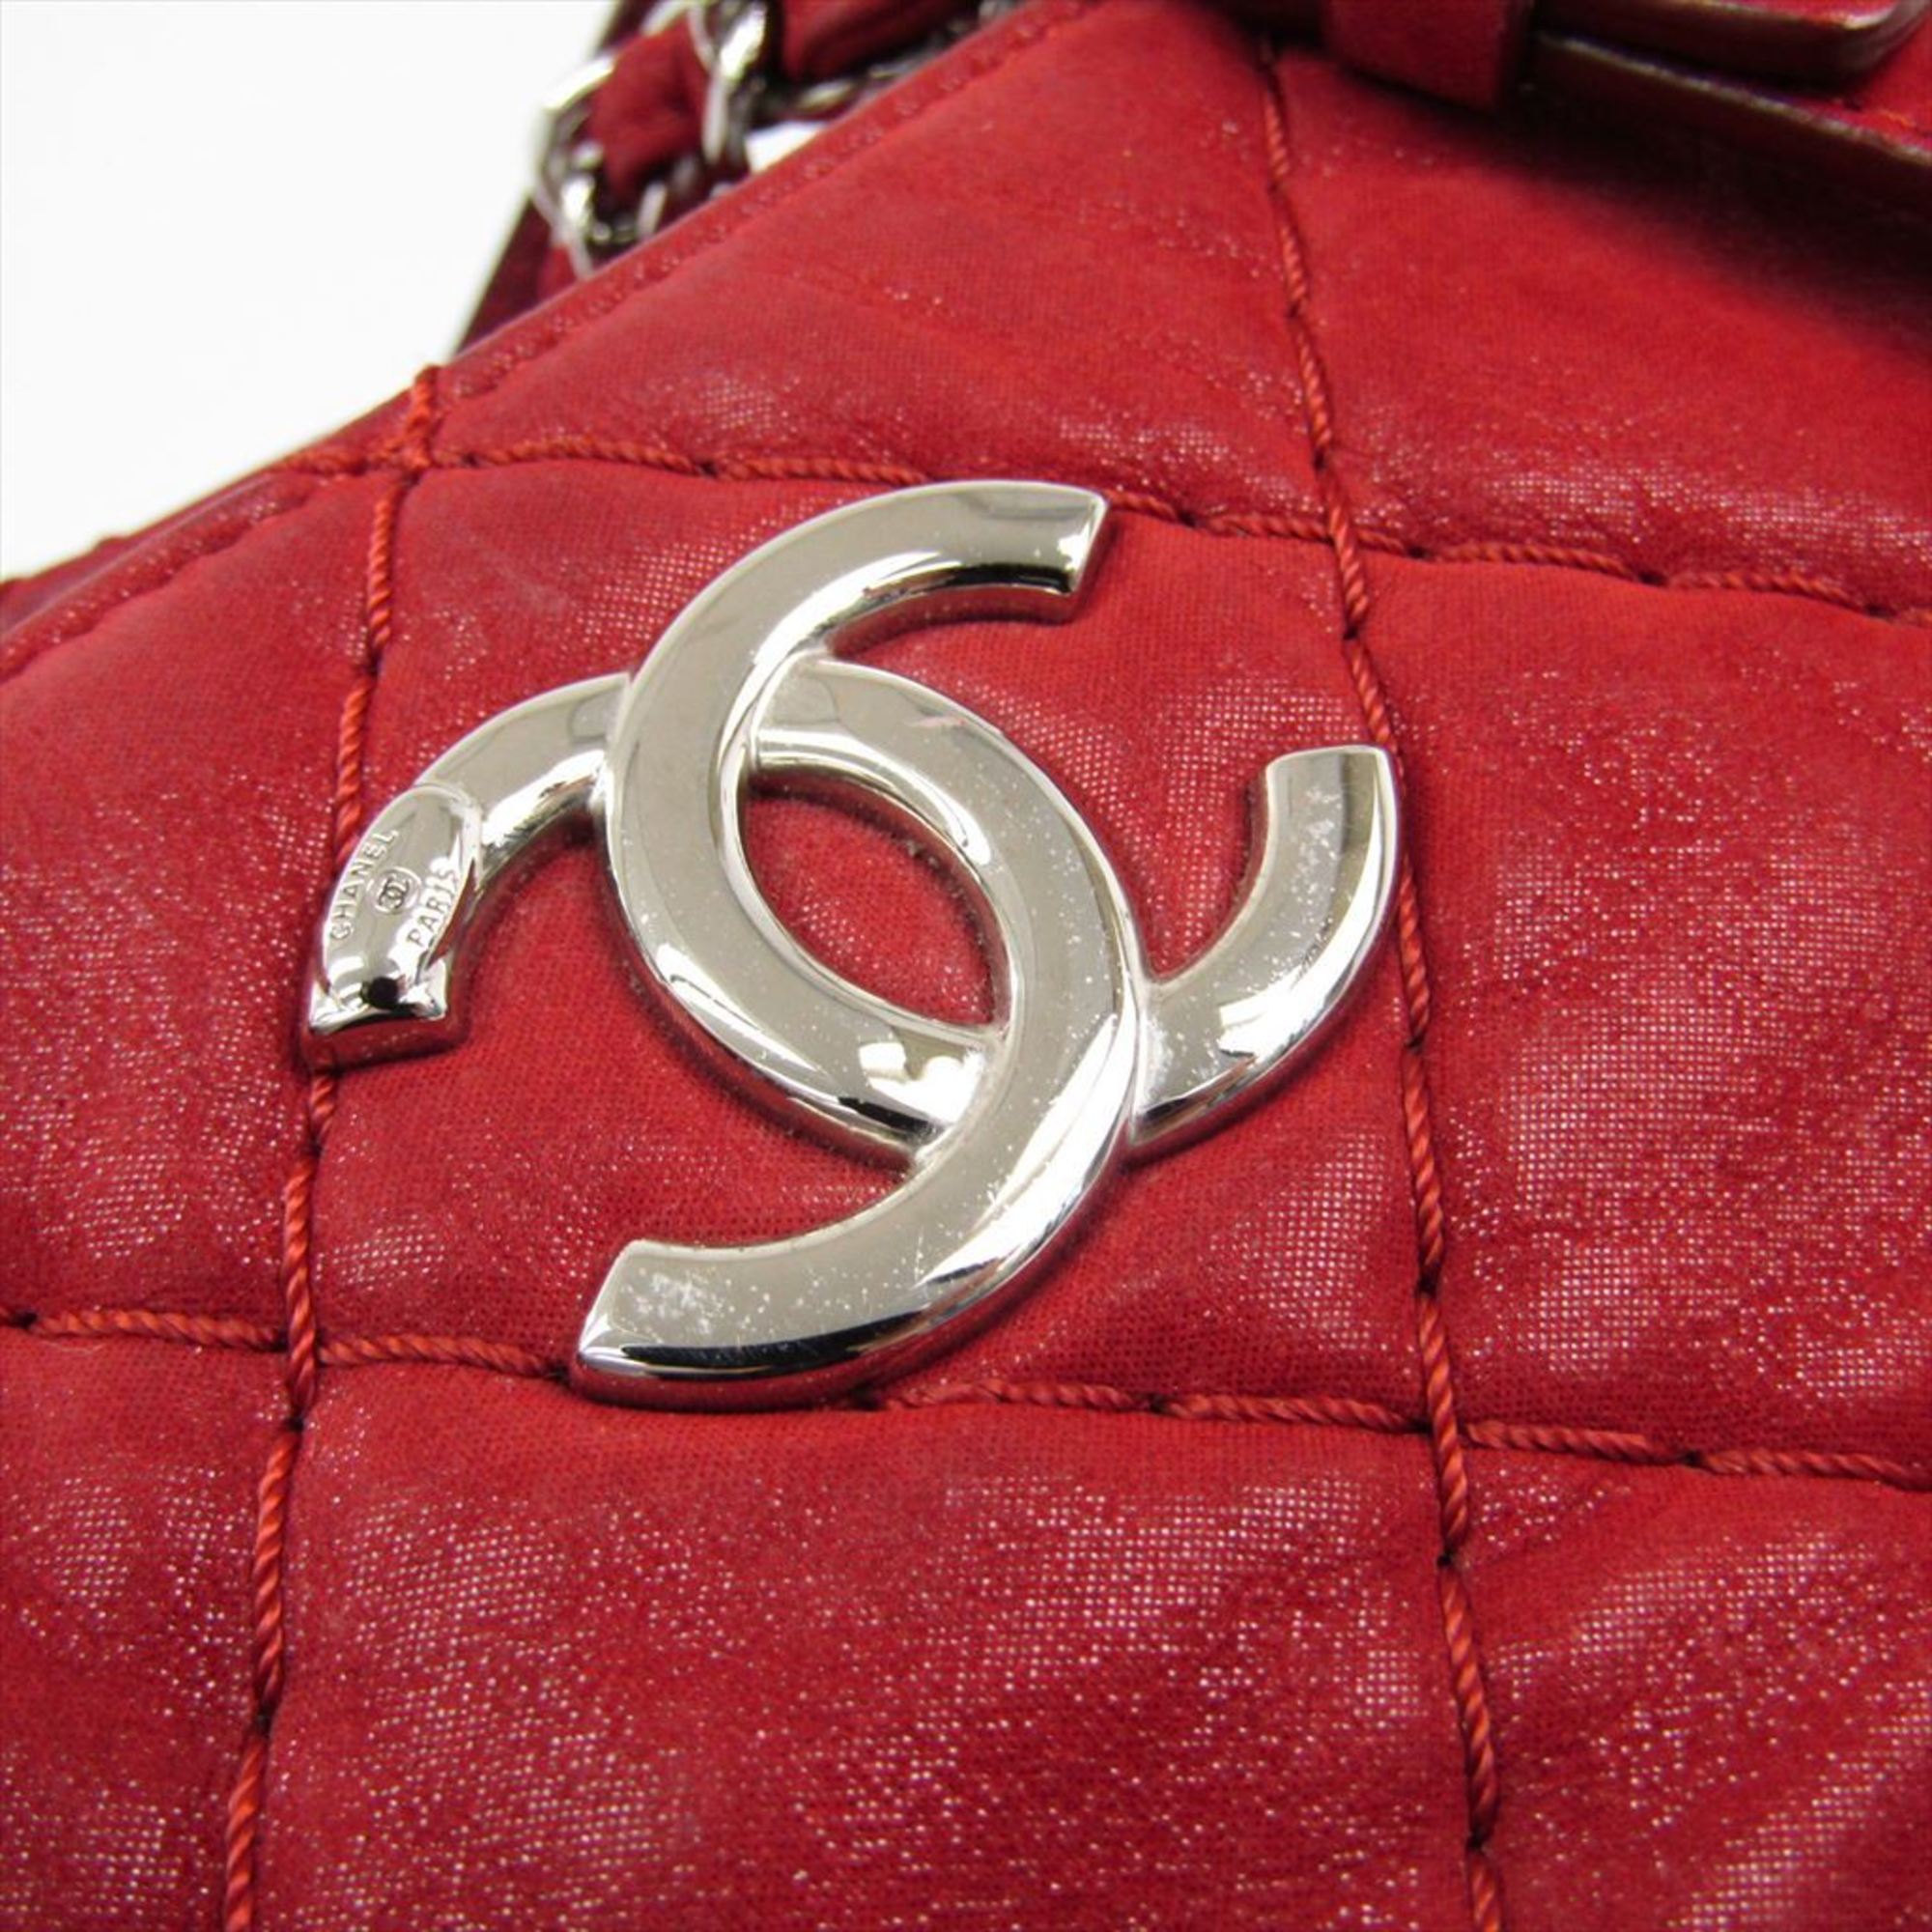 Chanel Wild Stitch Women's Leather Handbag,Shoulder Bag Red